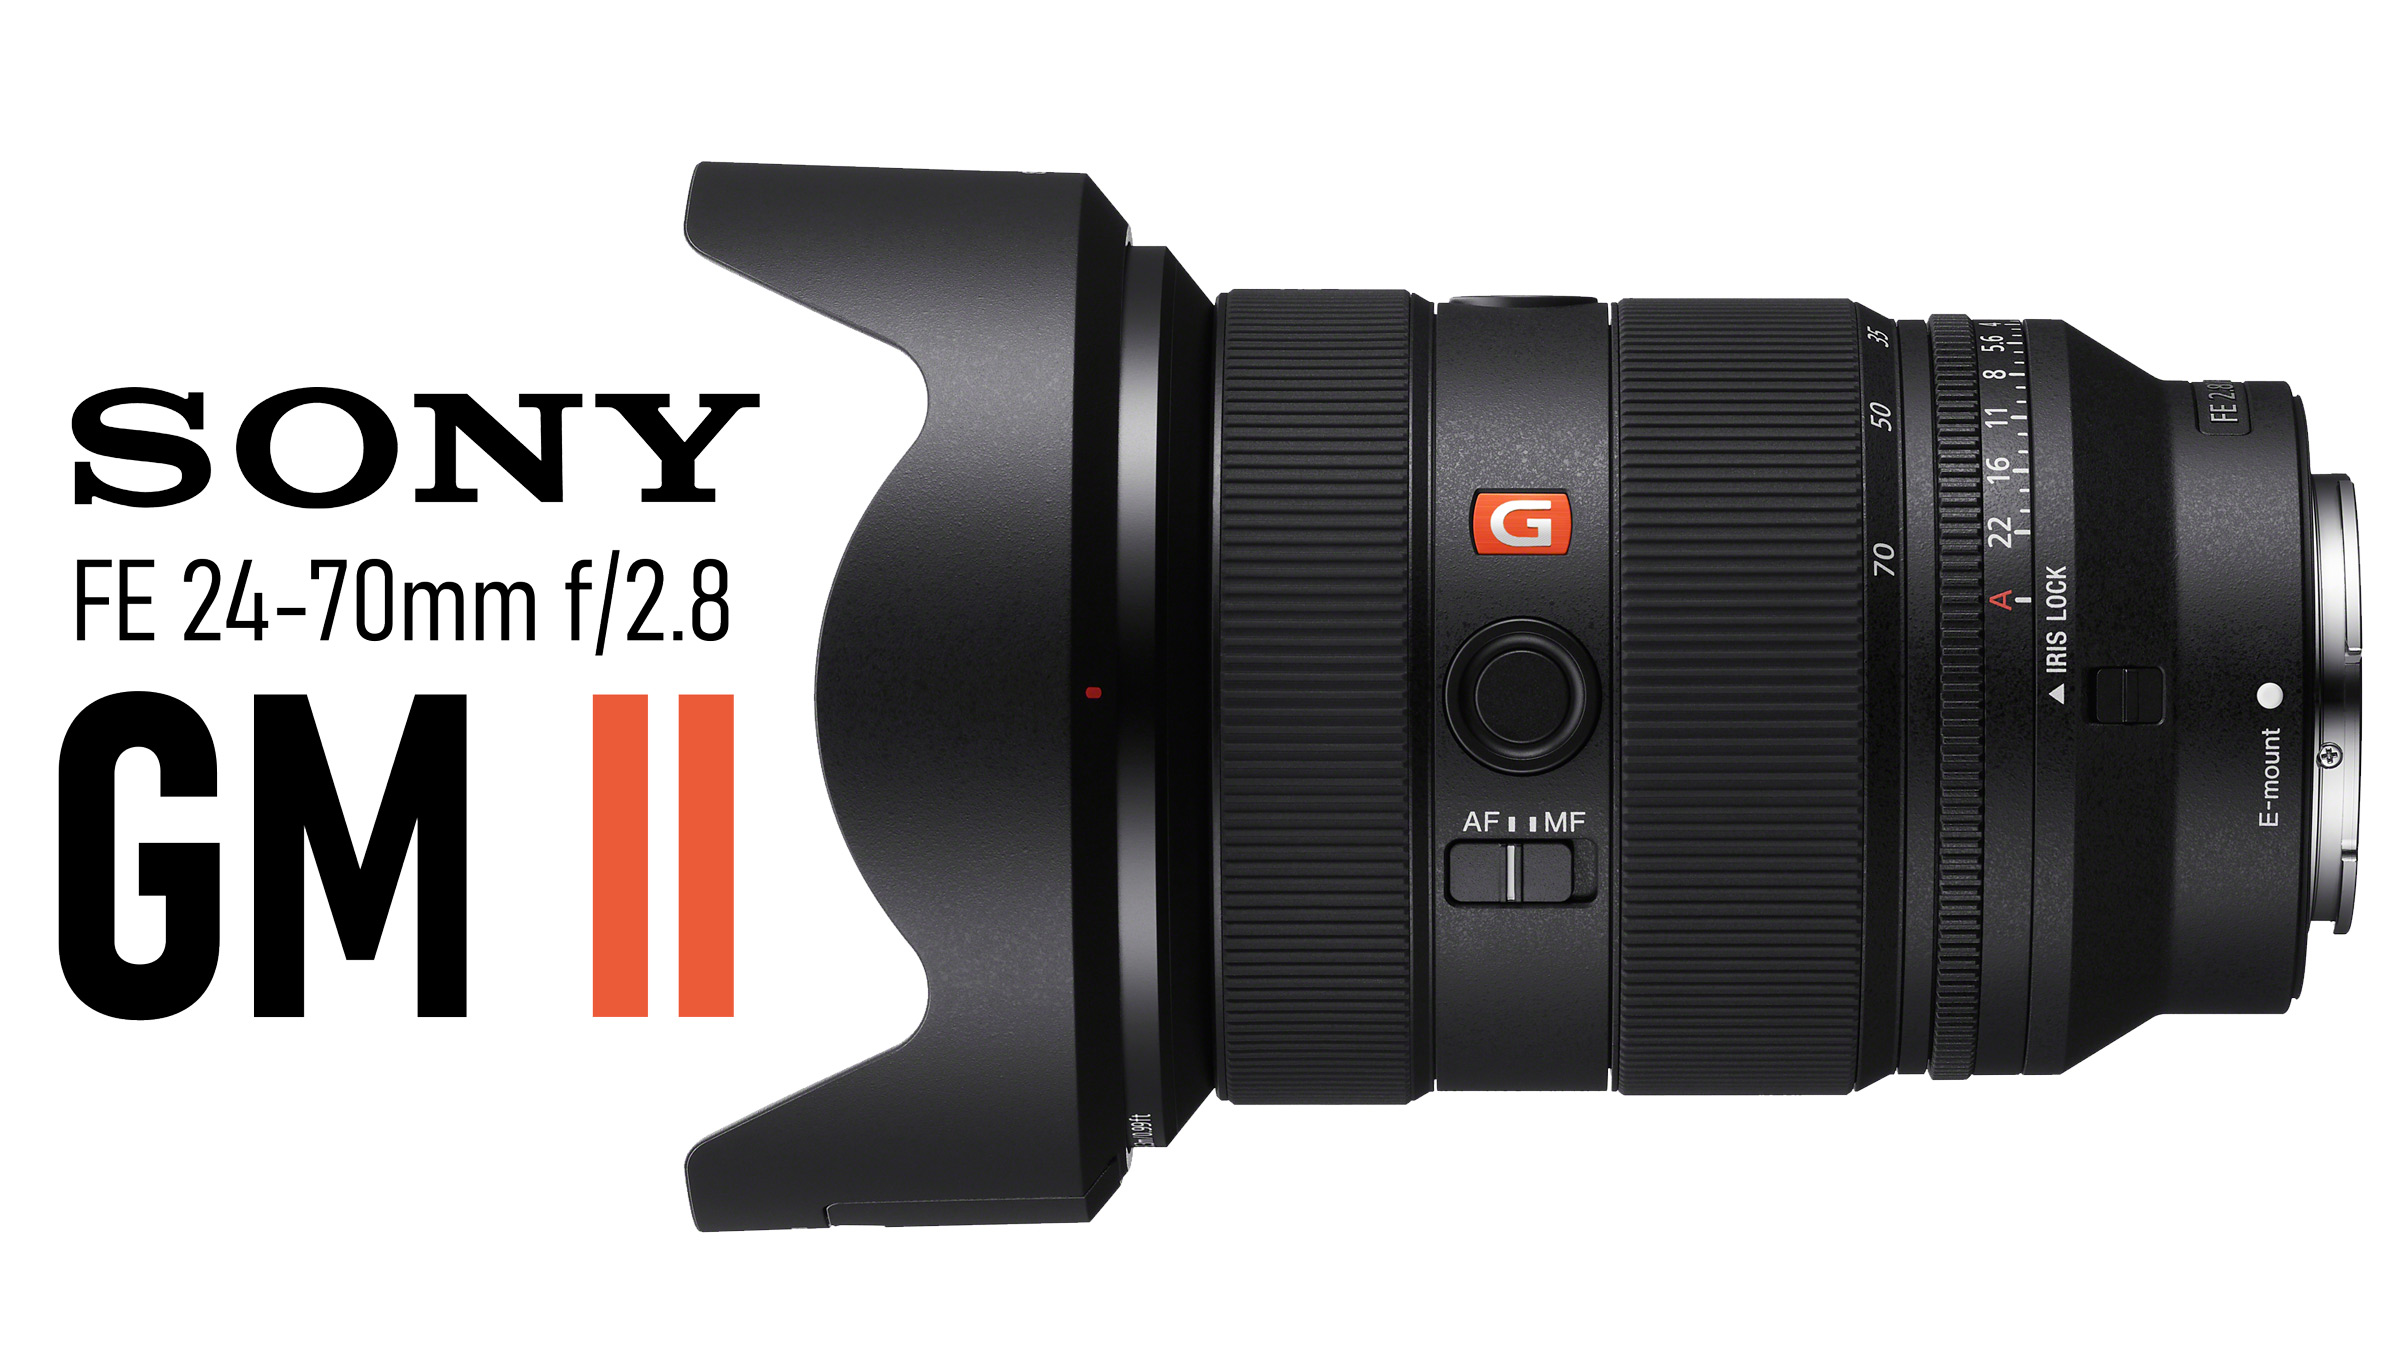 Sony A6400 Camera and Sony FE 24-70mm F2.8 GM Lens